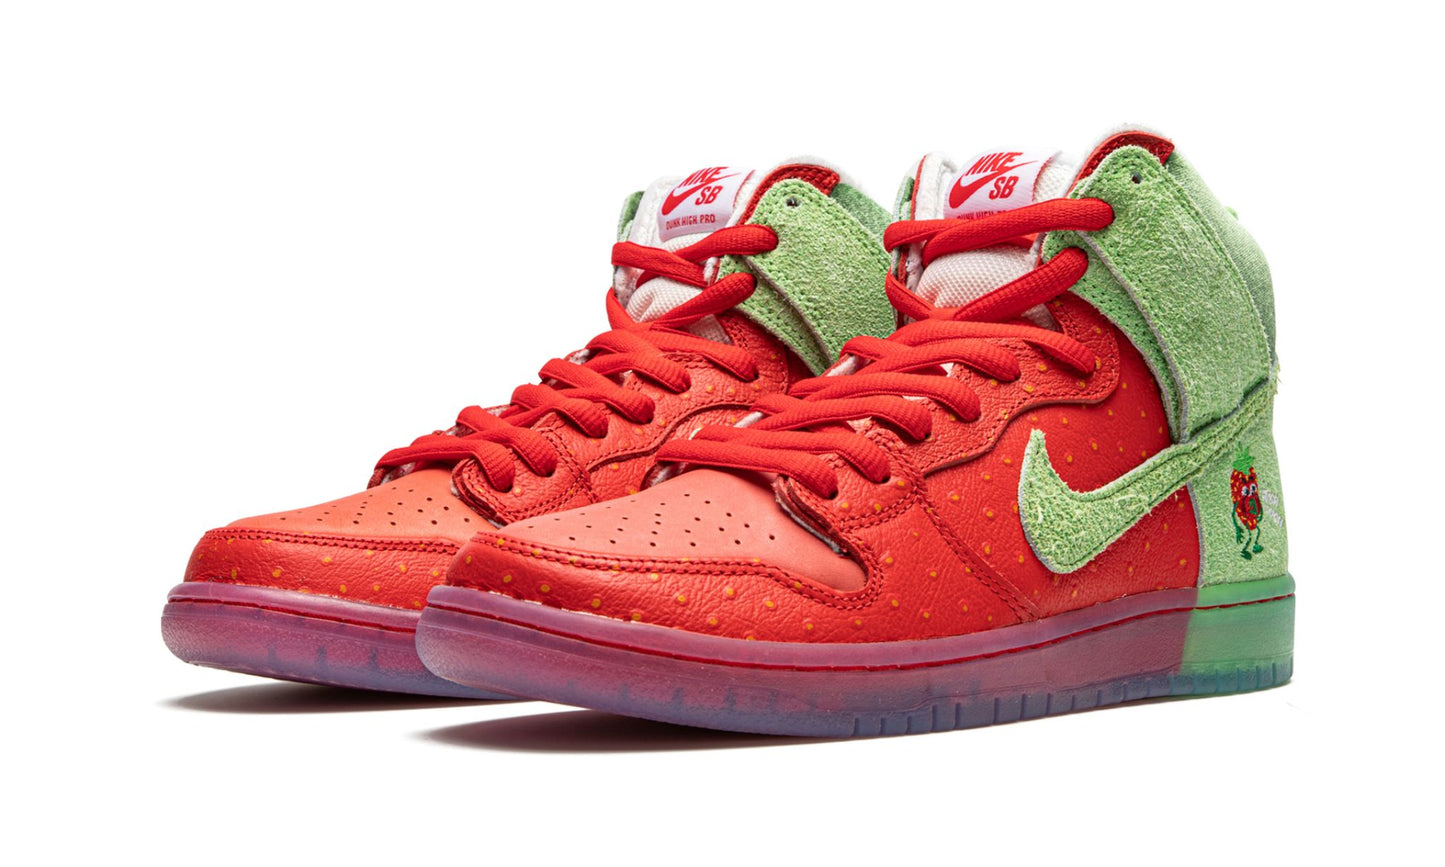 Nike SB Dunk High Pro Strawberry Cough